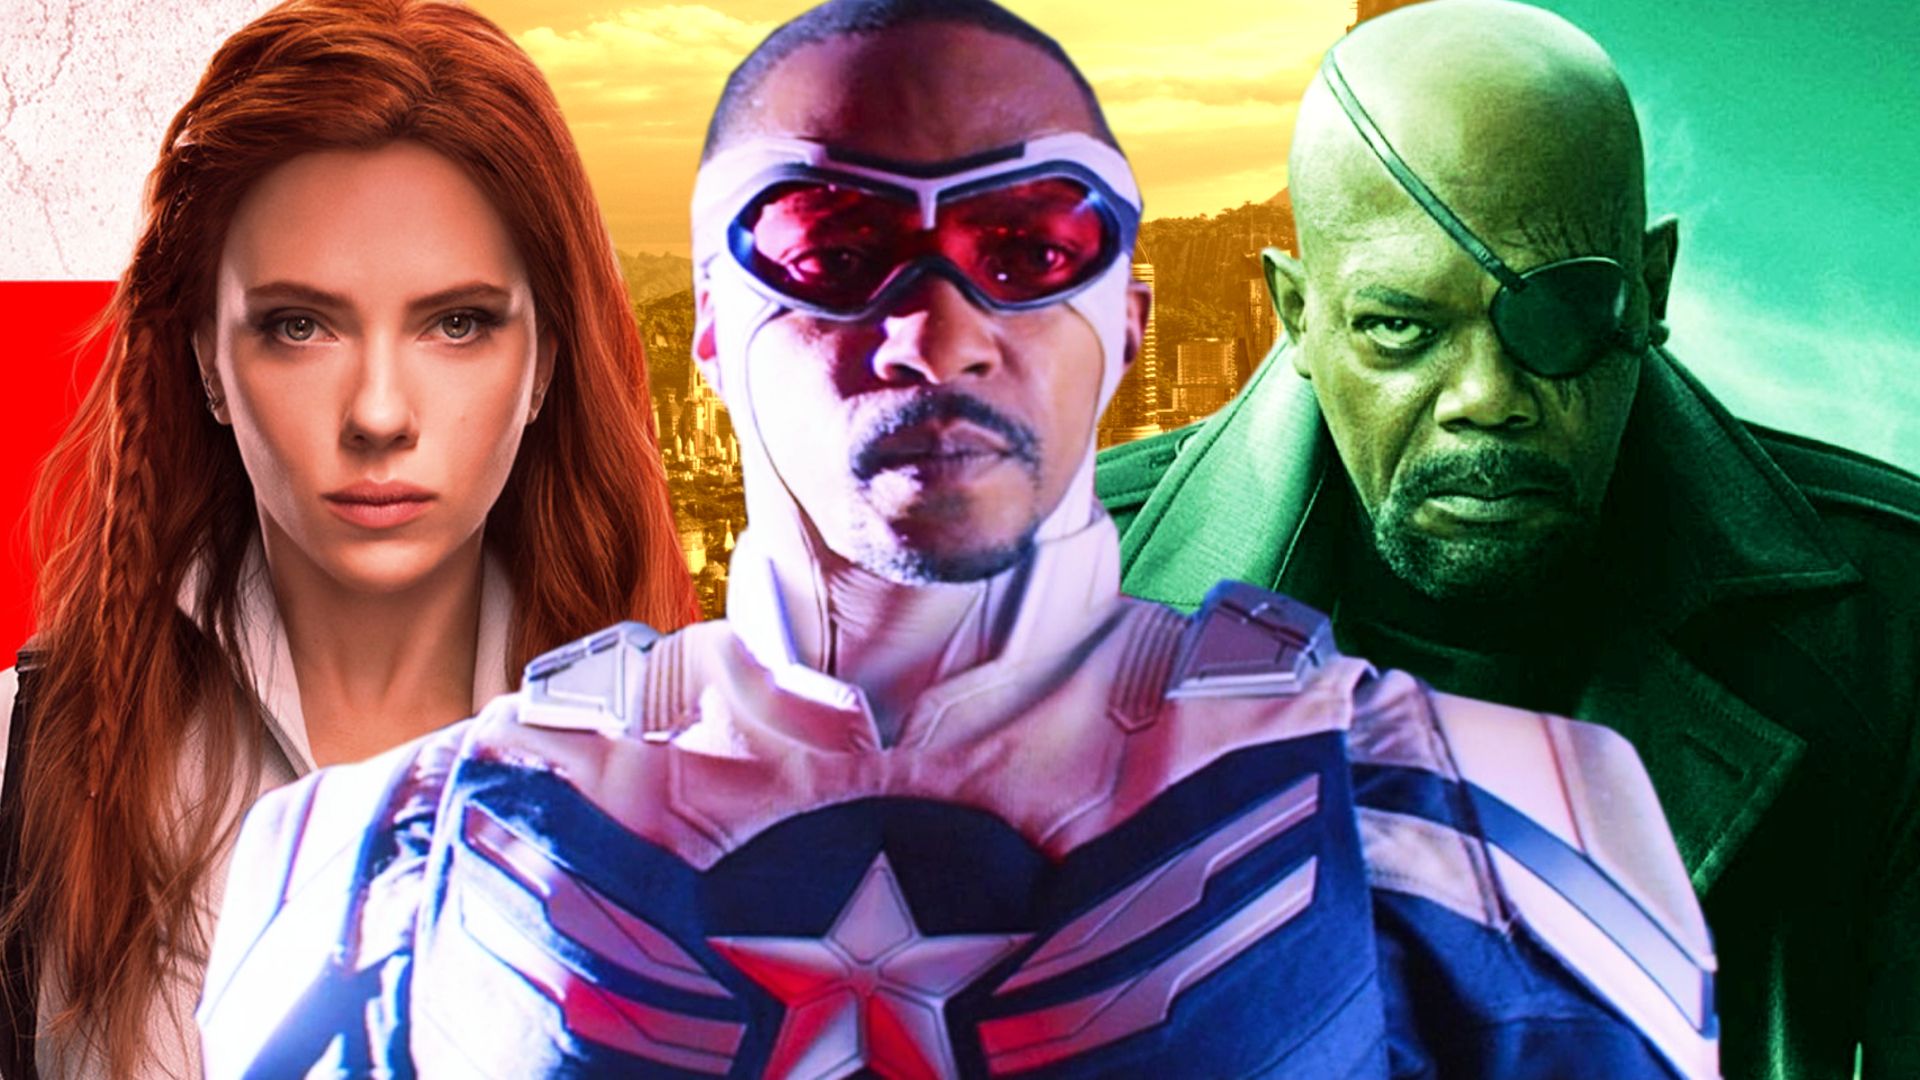 Anthony Mackie as Captain America, Scarlett Johansson as Black Widow, and Samuel L Jackson as Nick Fury YT